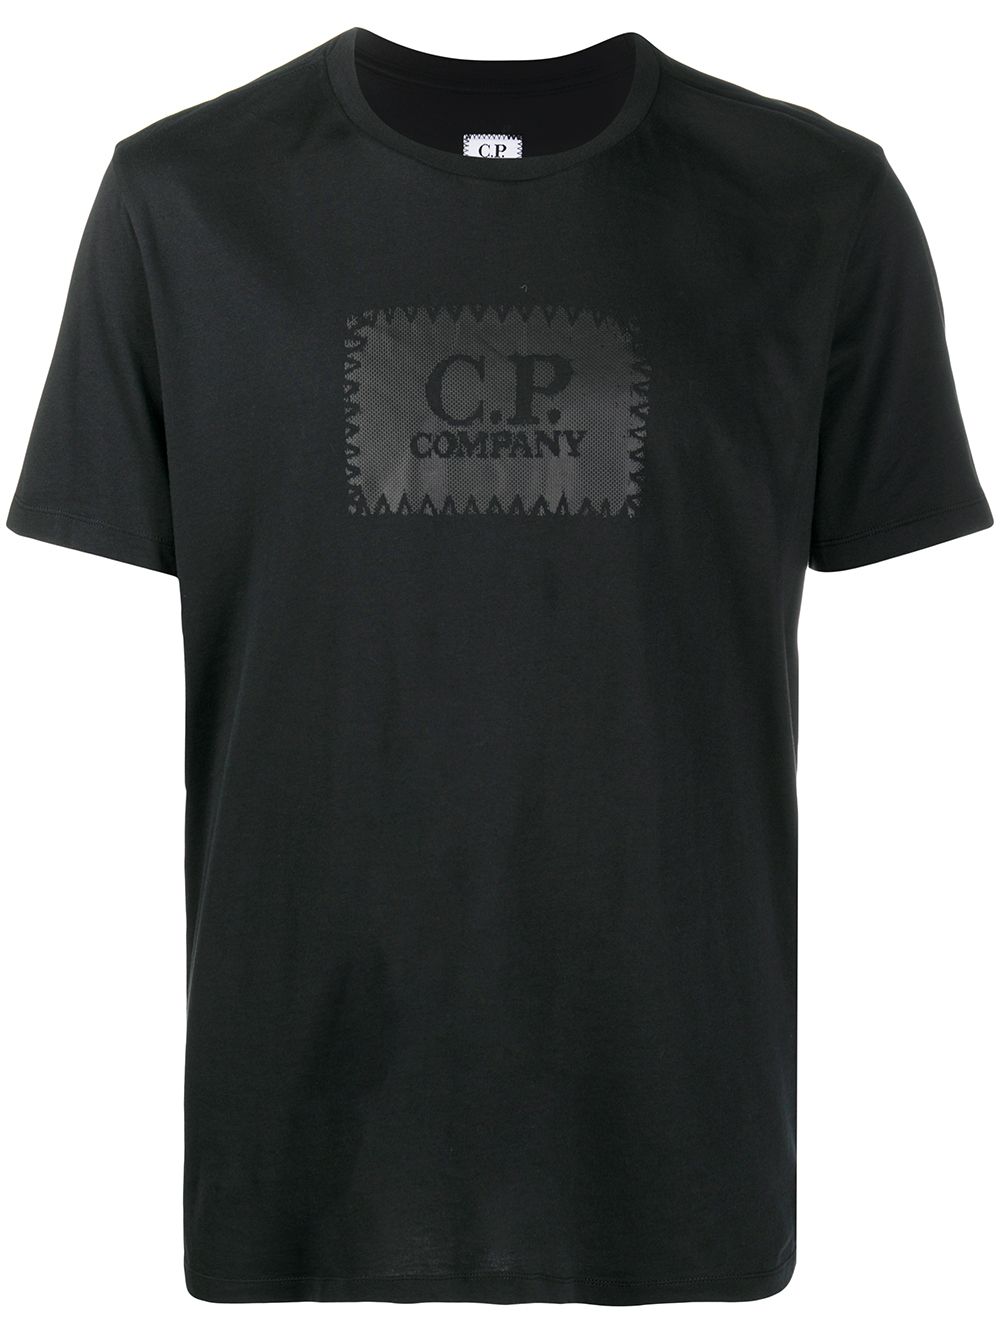 фото C.p. company футболка с круглым вырезом и логотипом